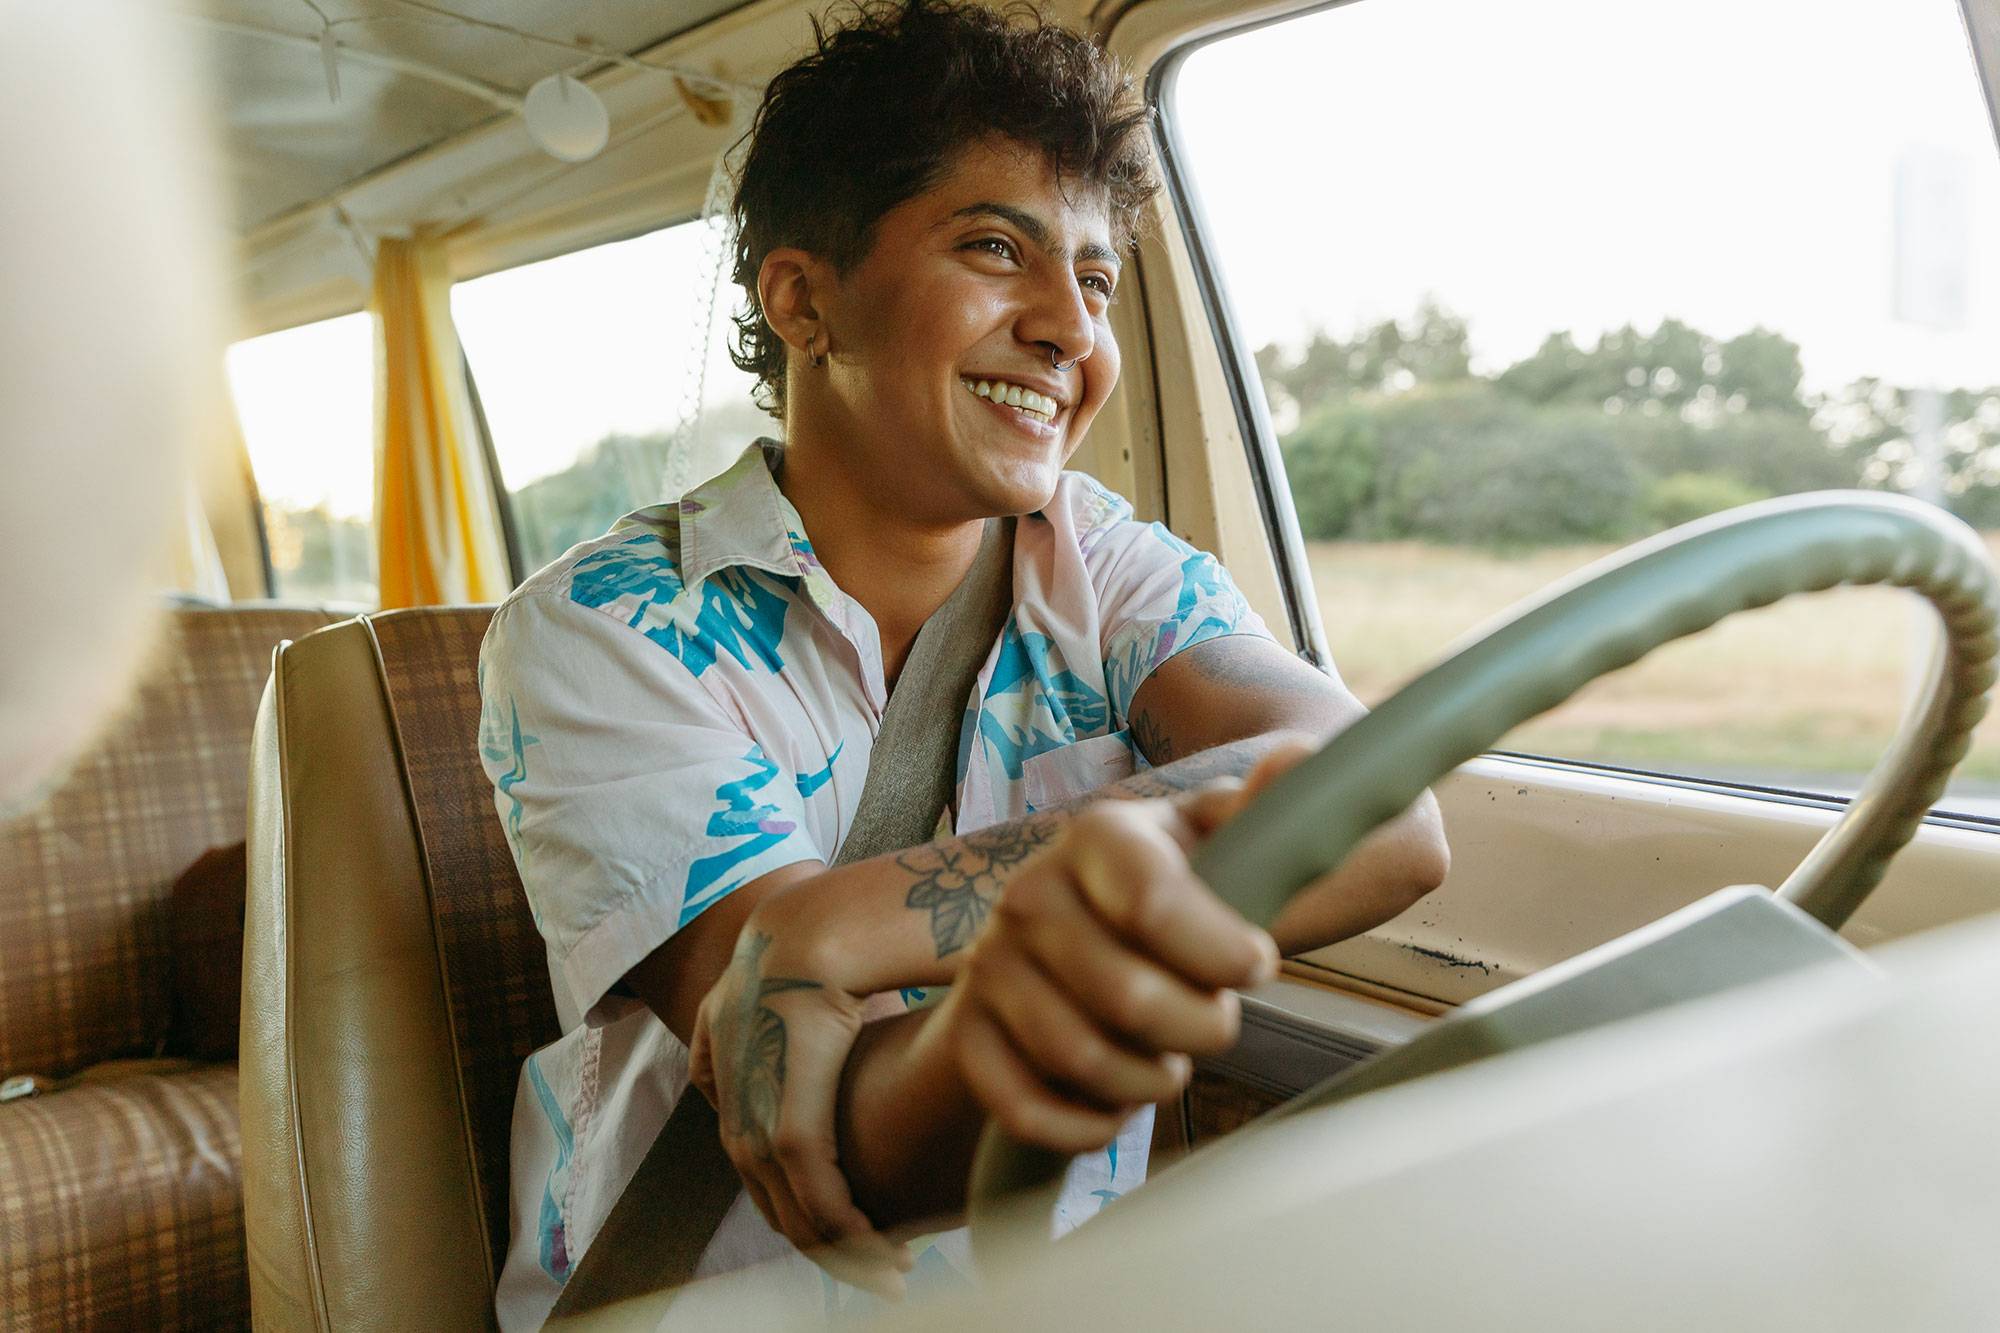 Gender-Neutral Driving Van While Smiling